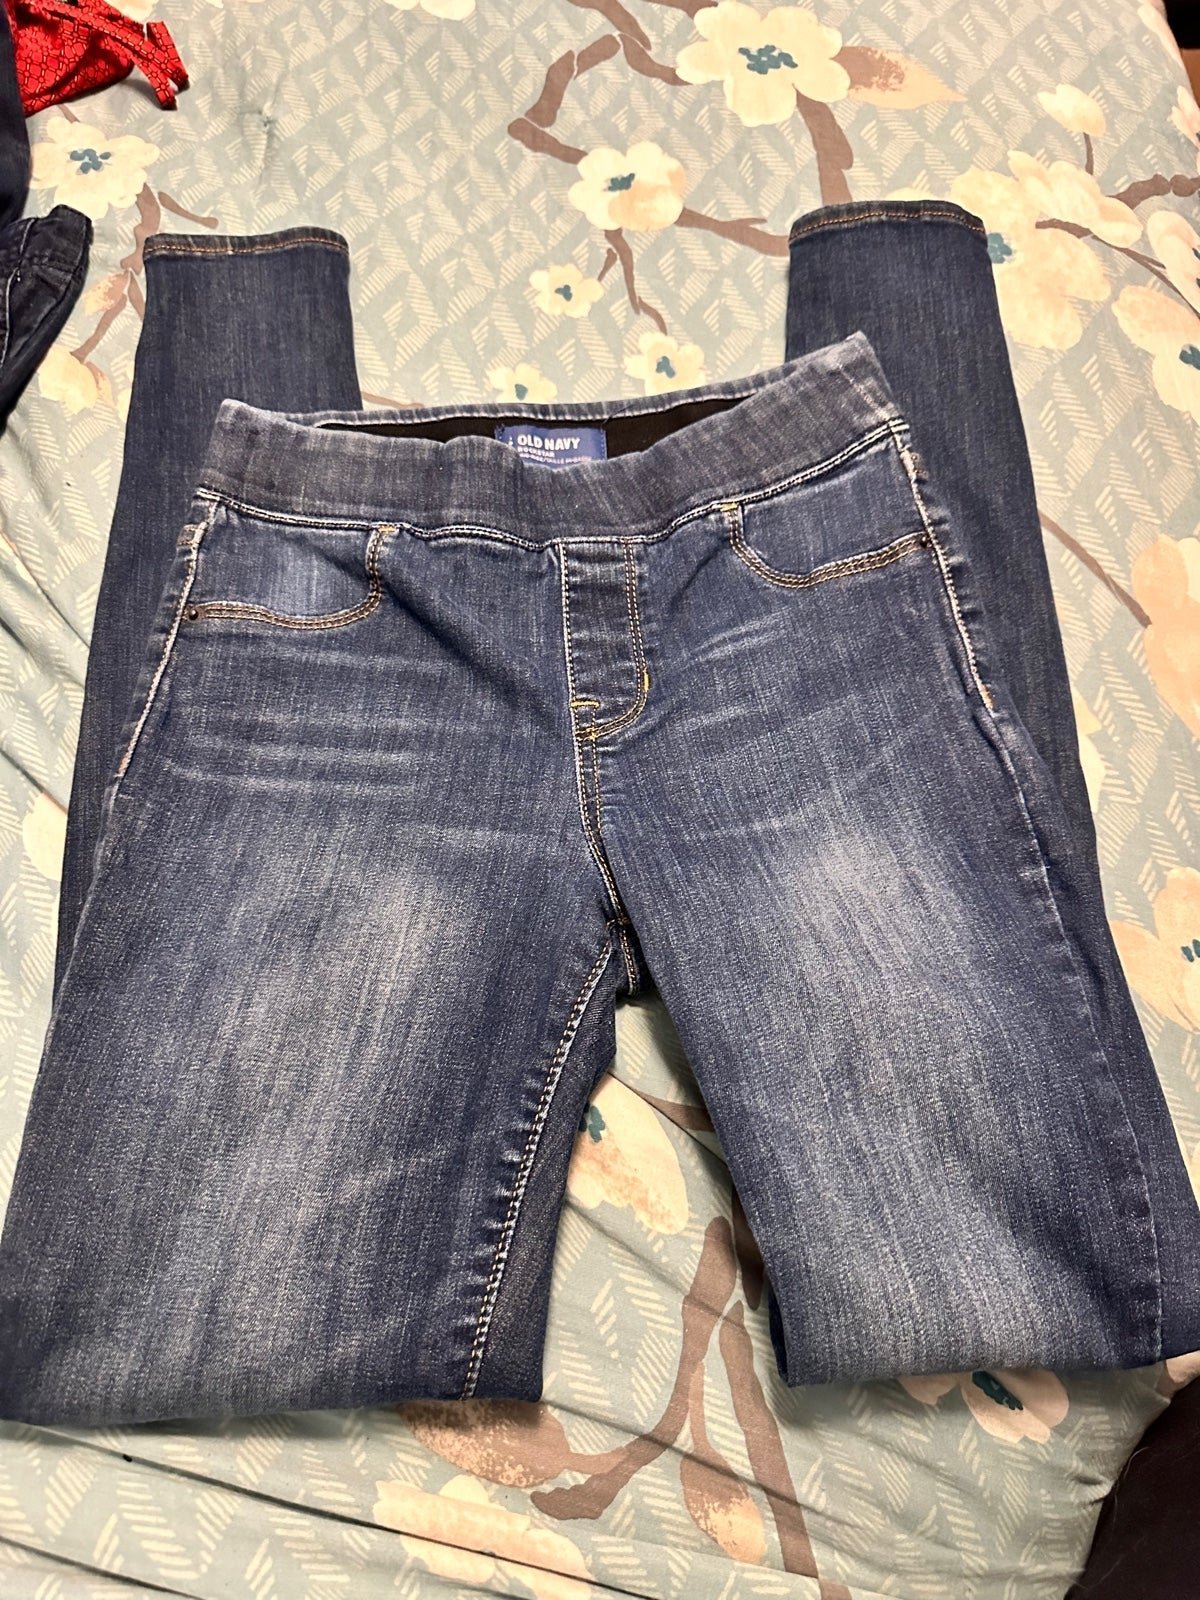 reasonable price Old navy size 0 jeans kxtVpxBKF Fashion